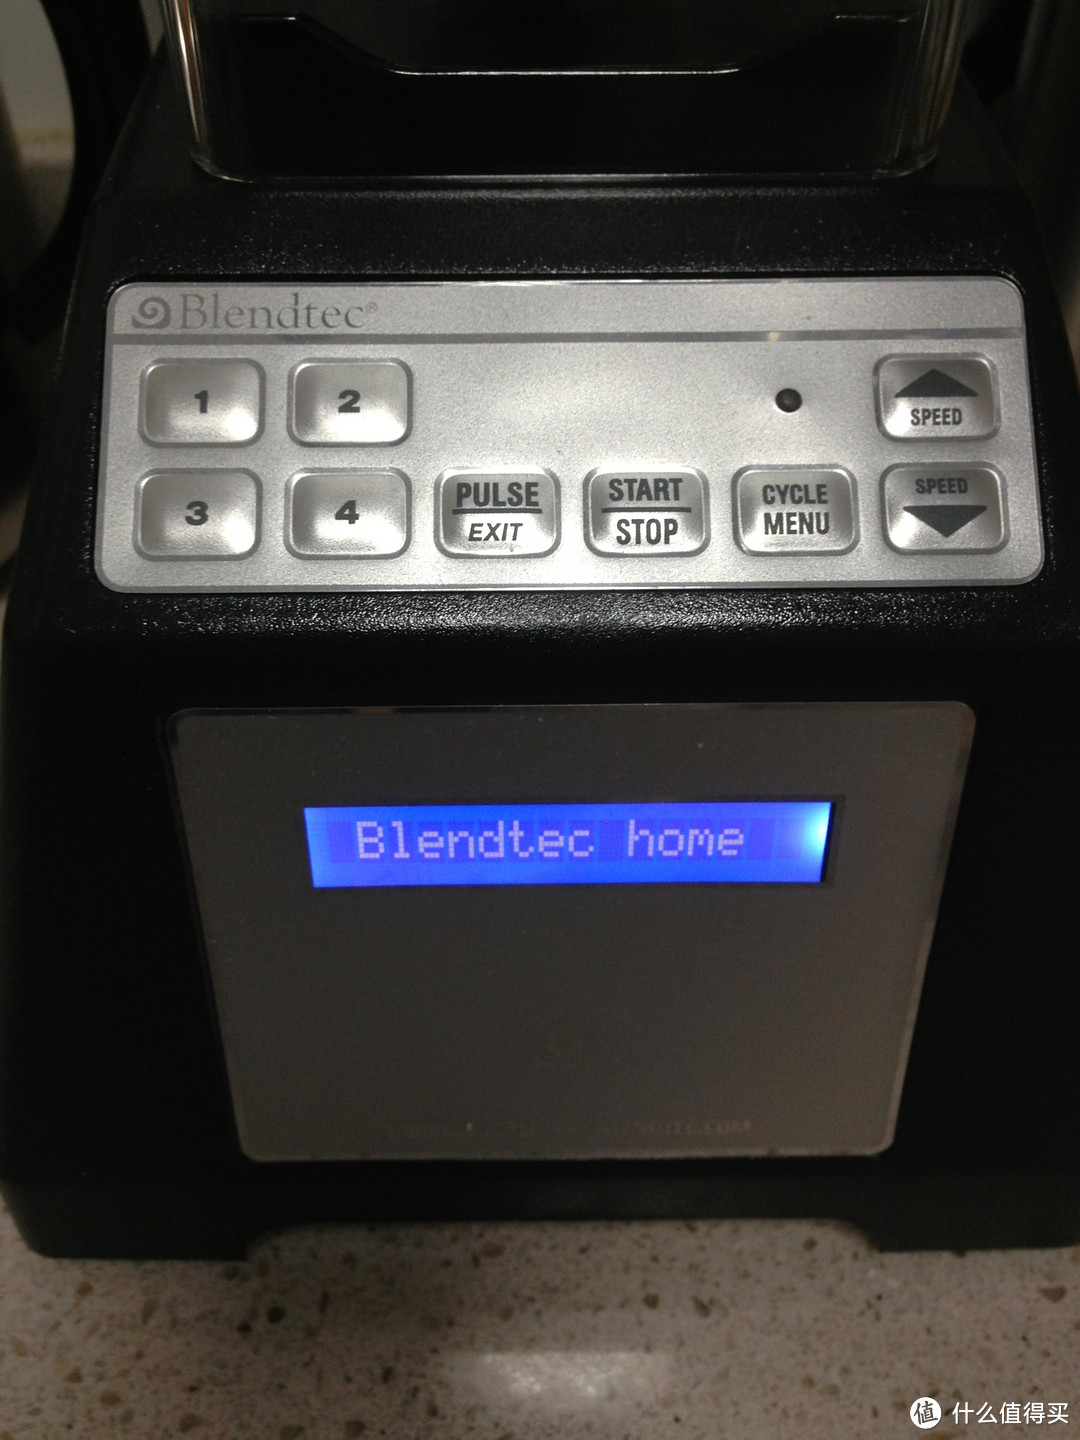 Blendtec搅拌机-搅碎iPhone,iPad各种电子设备. M快餐,绿咖啡店的伙伴